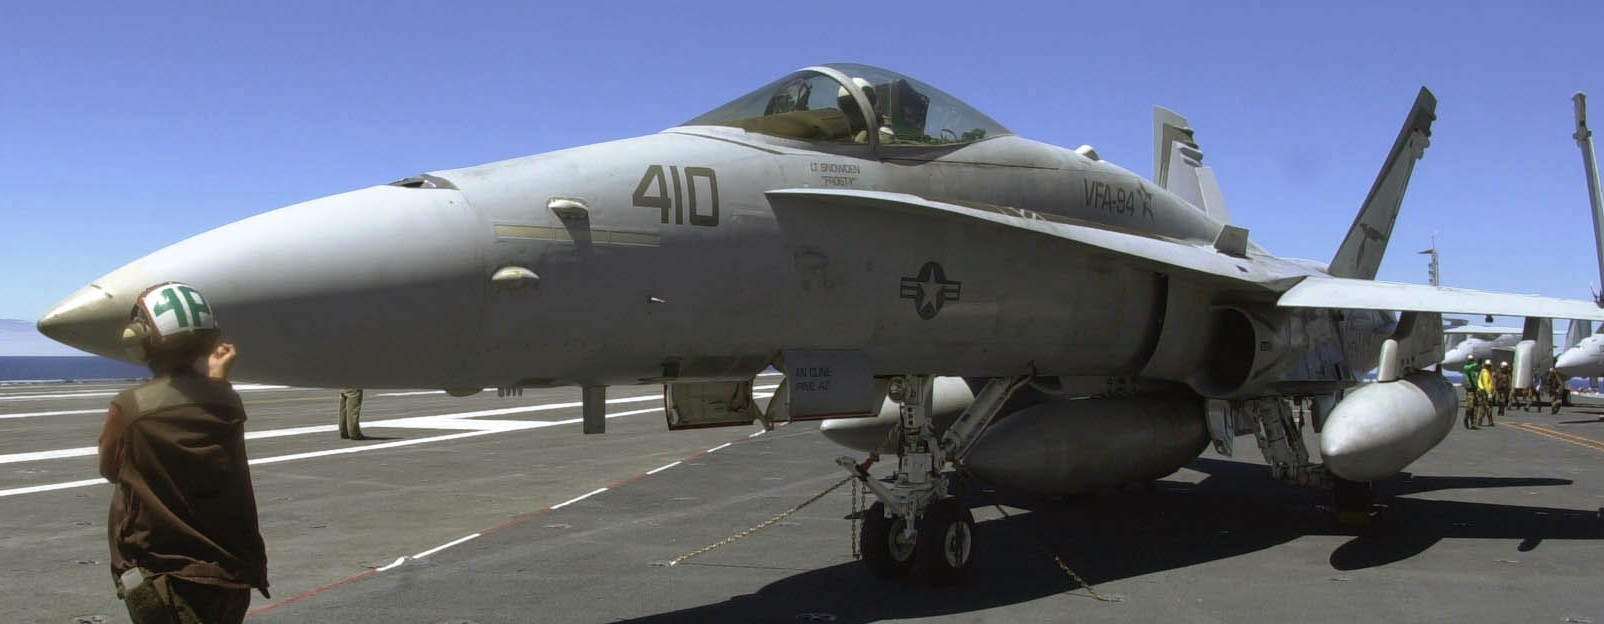 vfa-94 mighty shrikes strike fighter squadron f/a-18c hornet cvw-11 uss nimitz cvn-68 us navy 47p